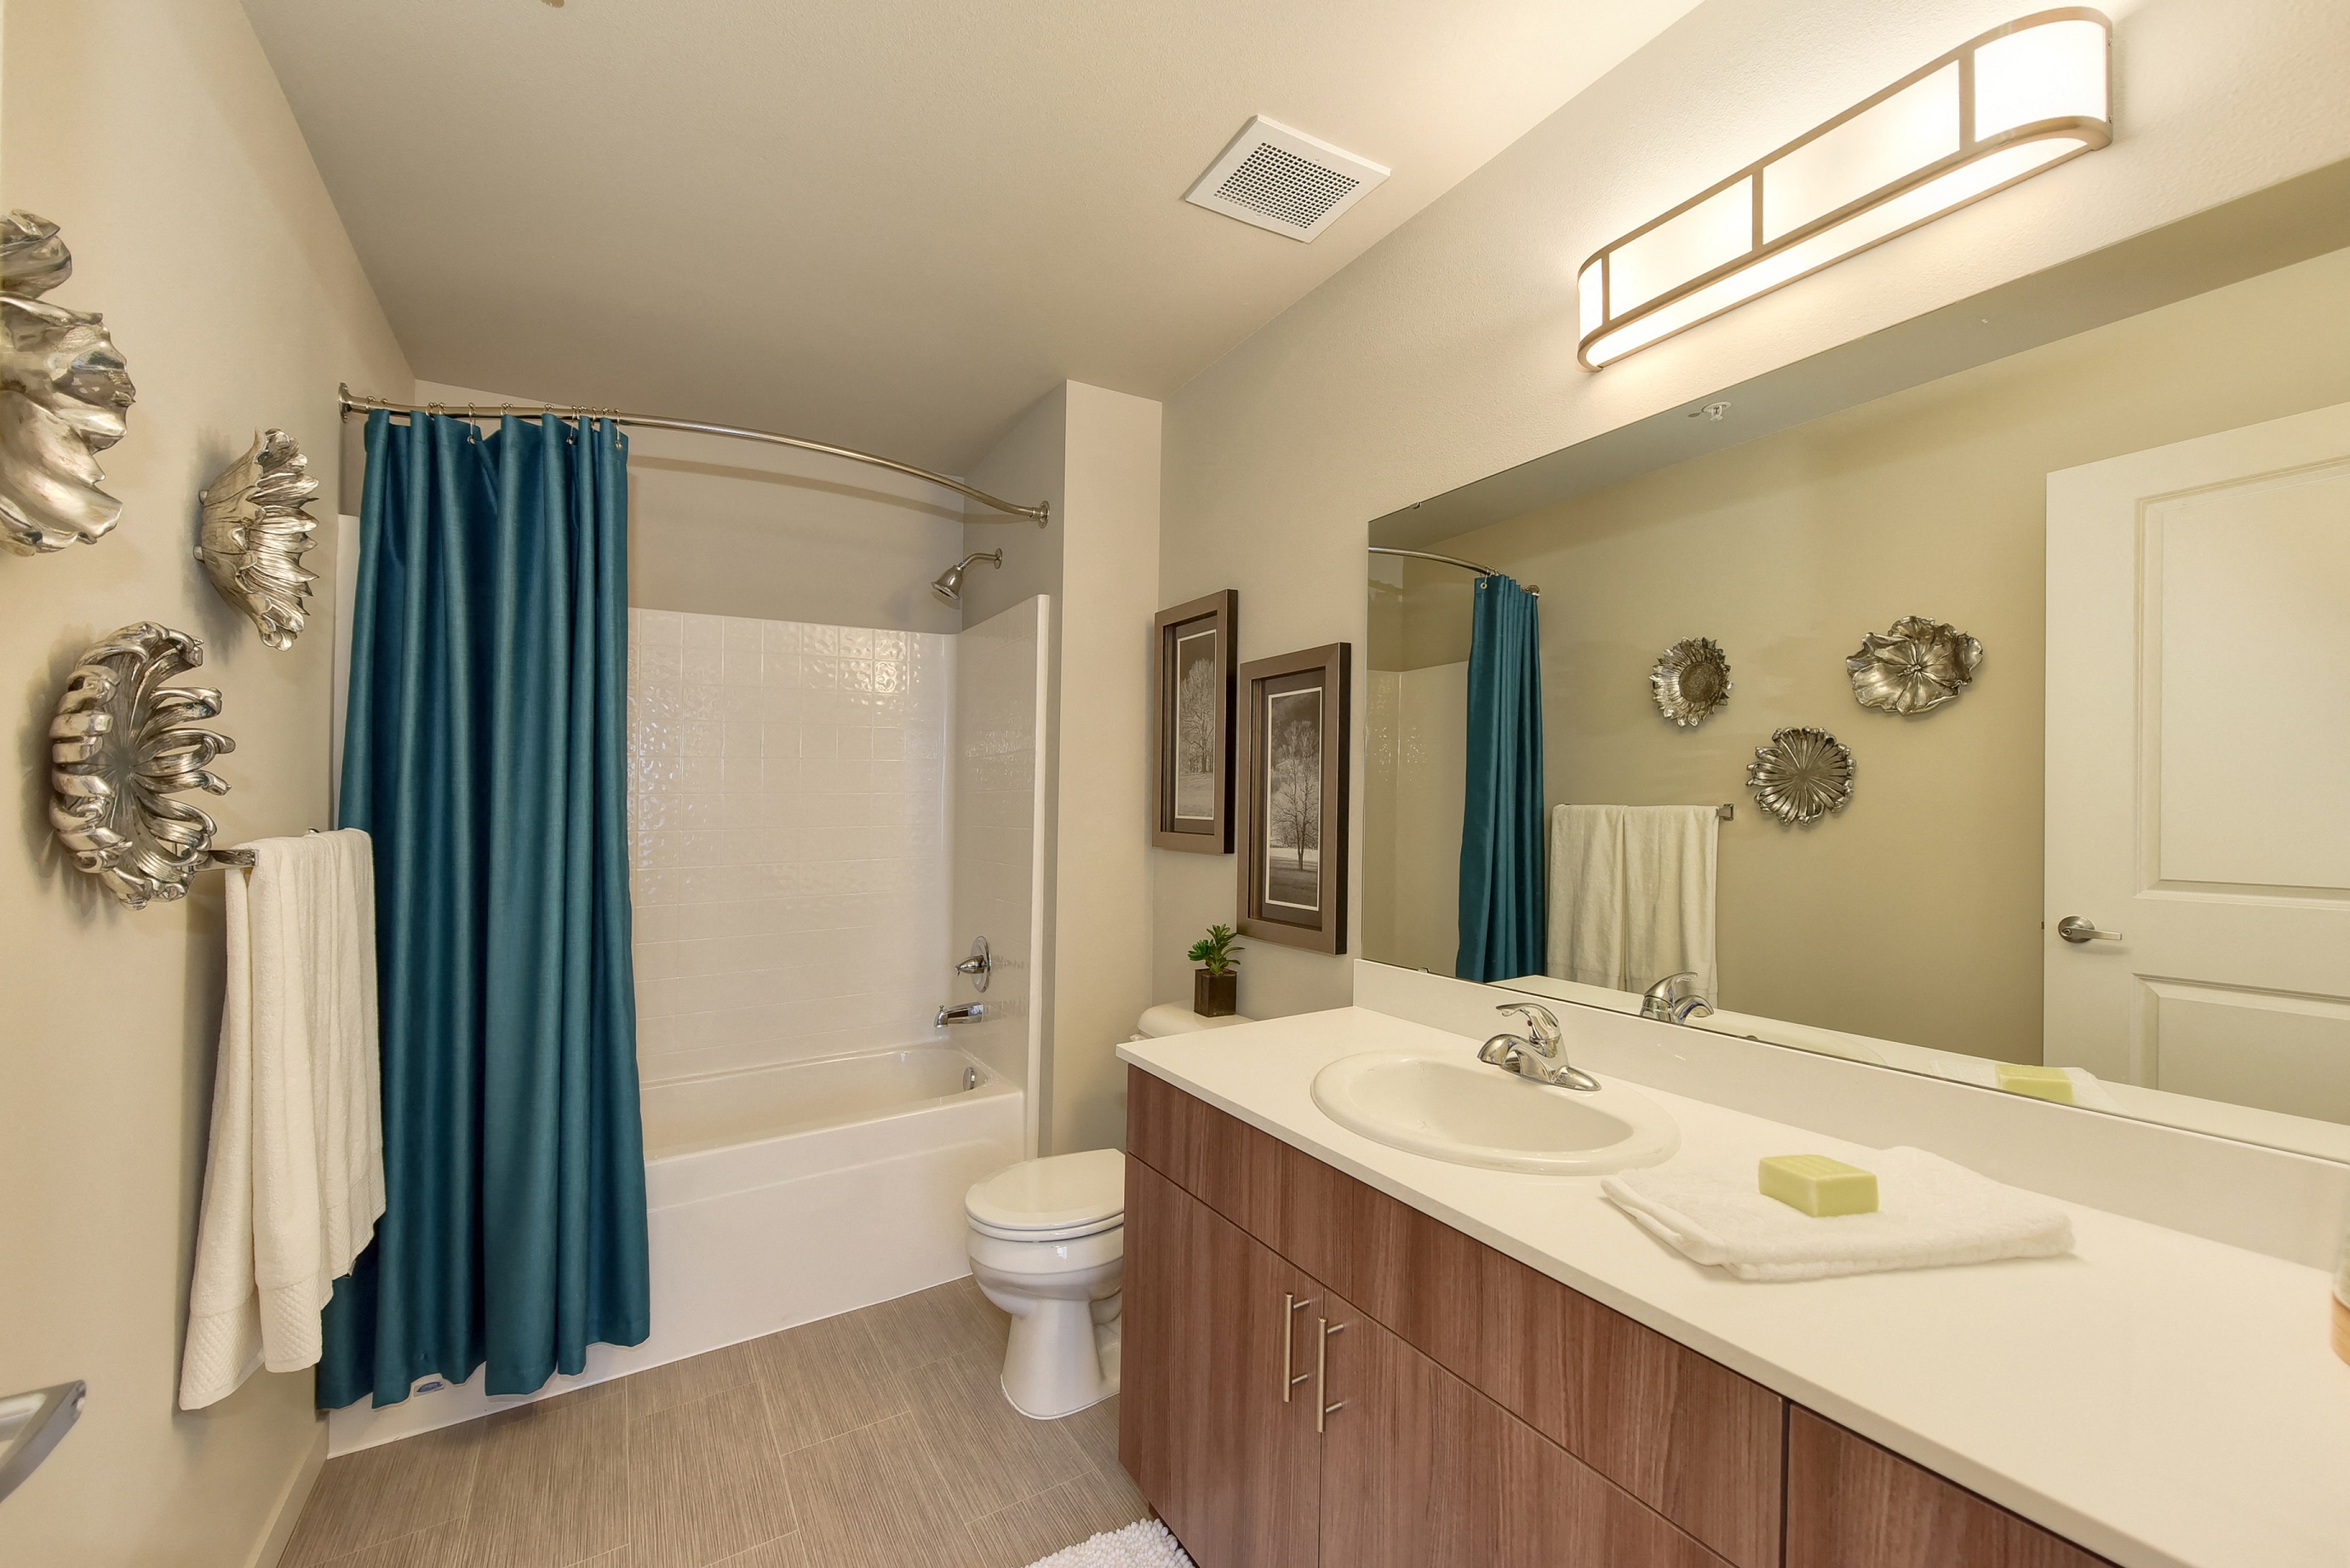 Master Bathroom with Vanity, Bath/Shower, Blue Curtains, Toilet, Wood Inspired Floor